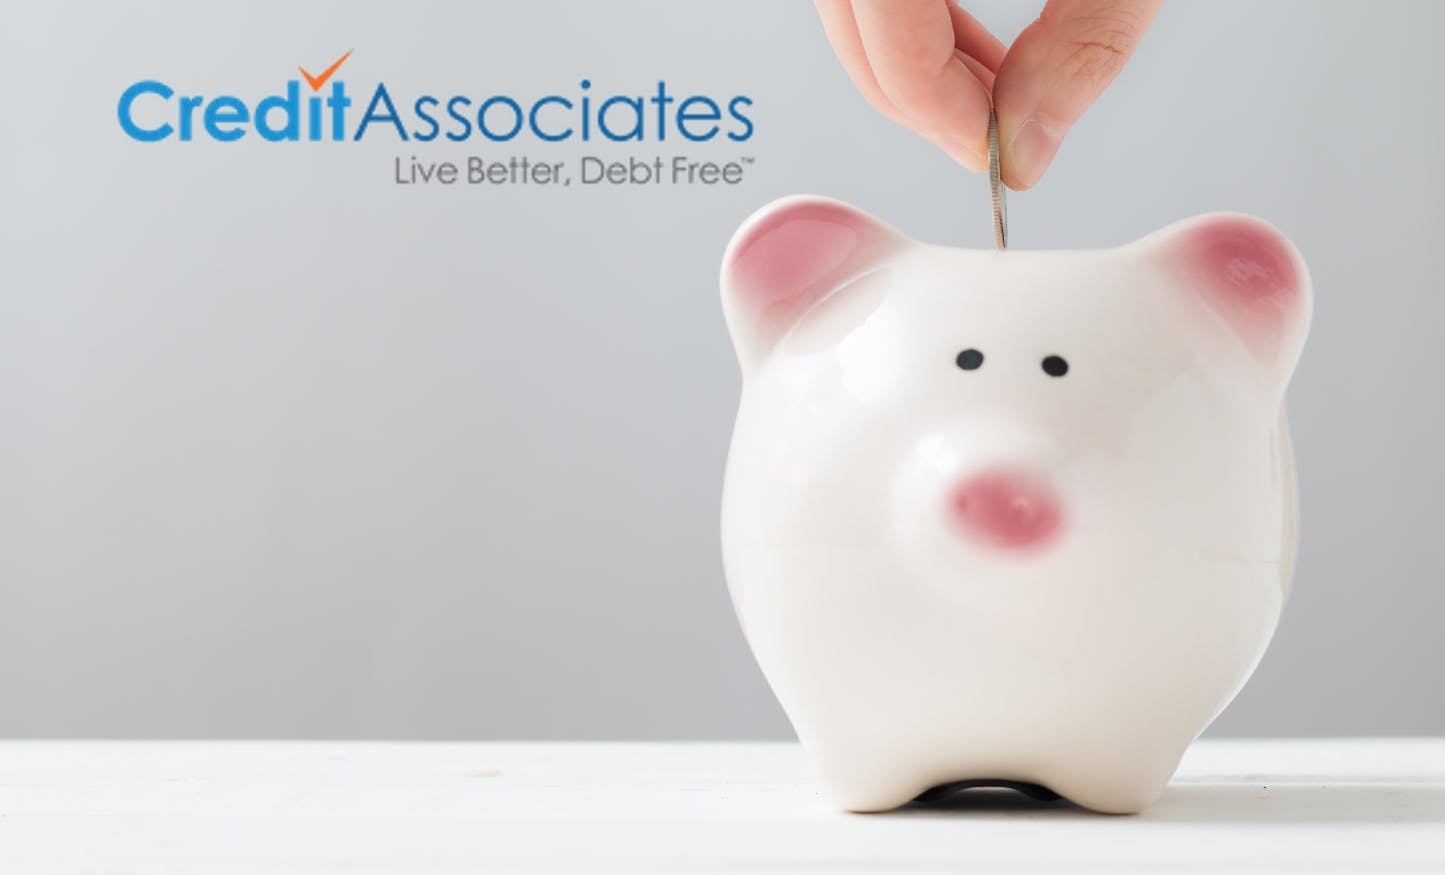 Credit Associates Review: Live Better, Debt Free!